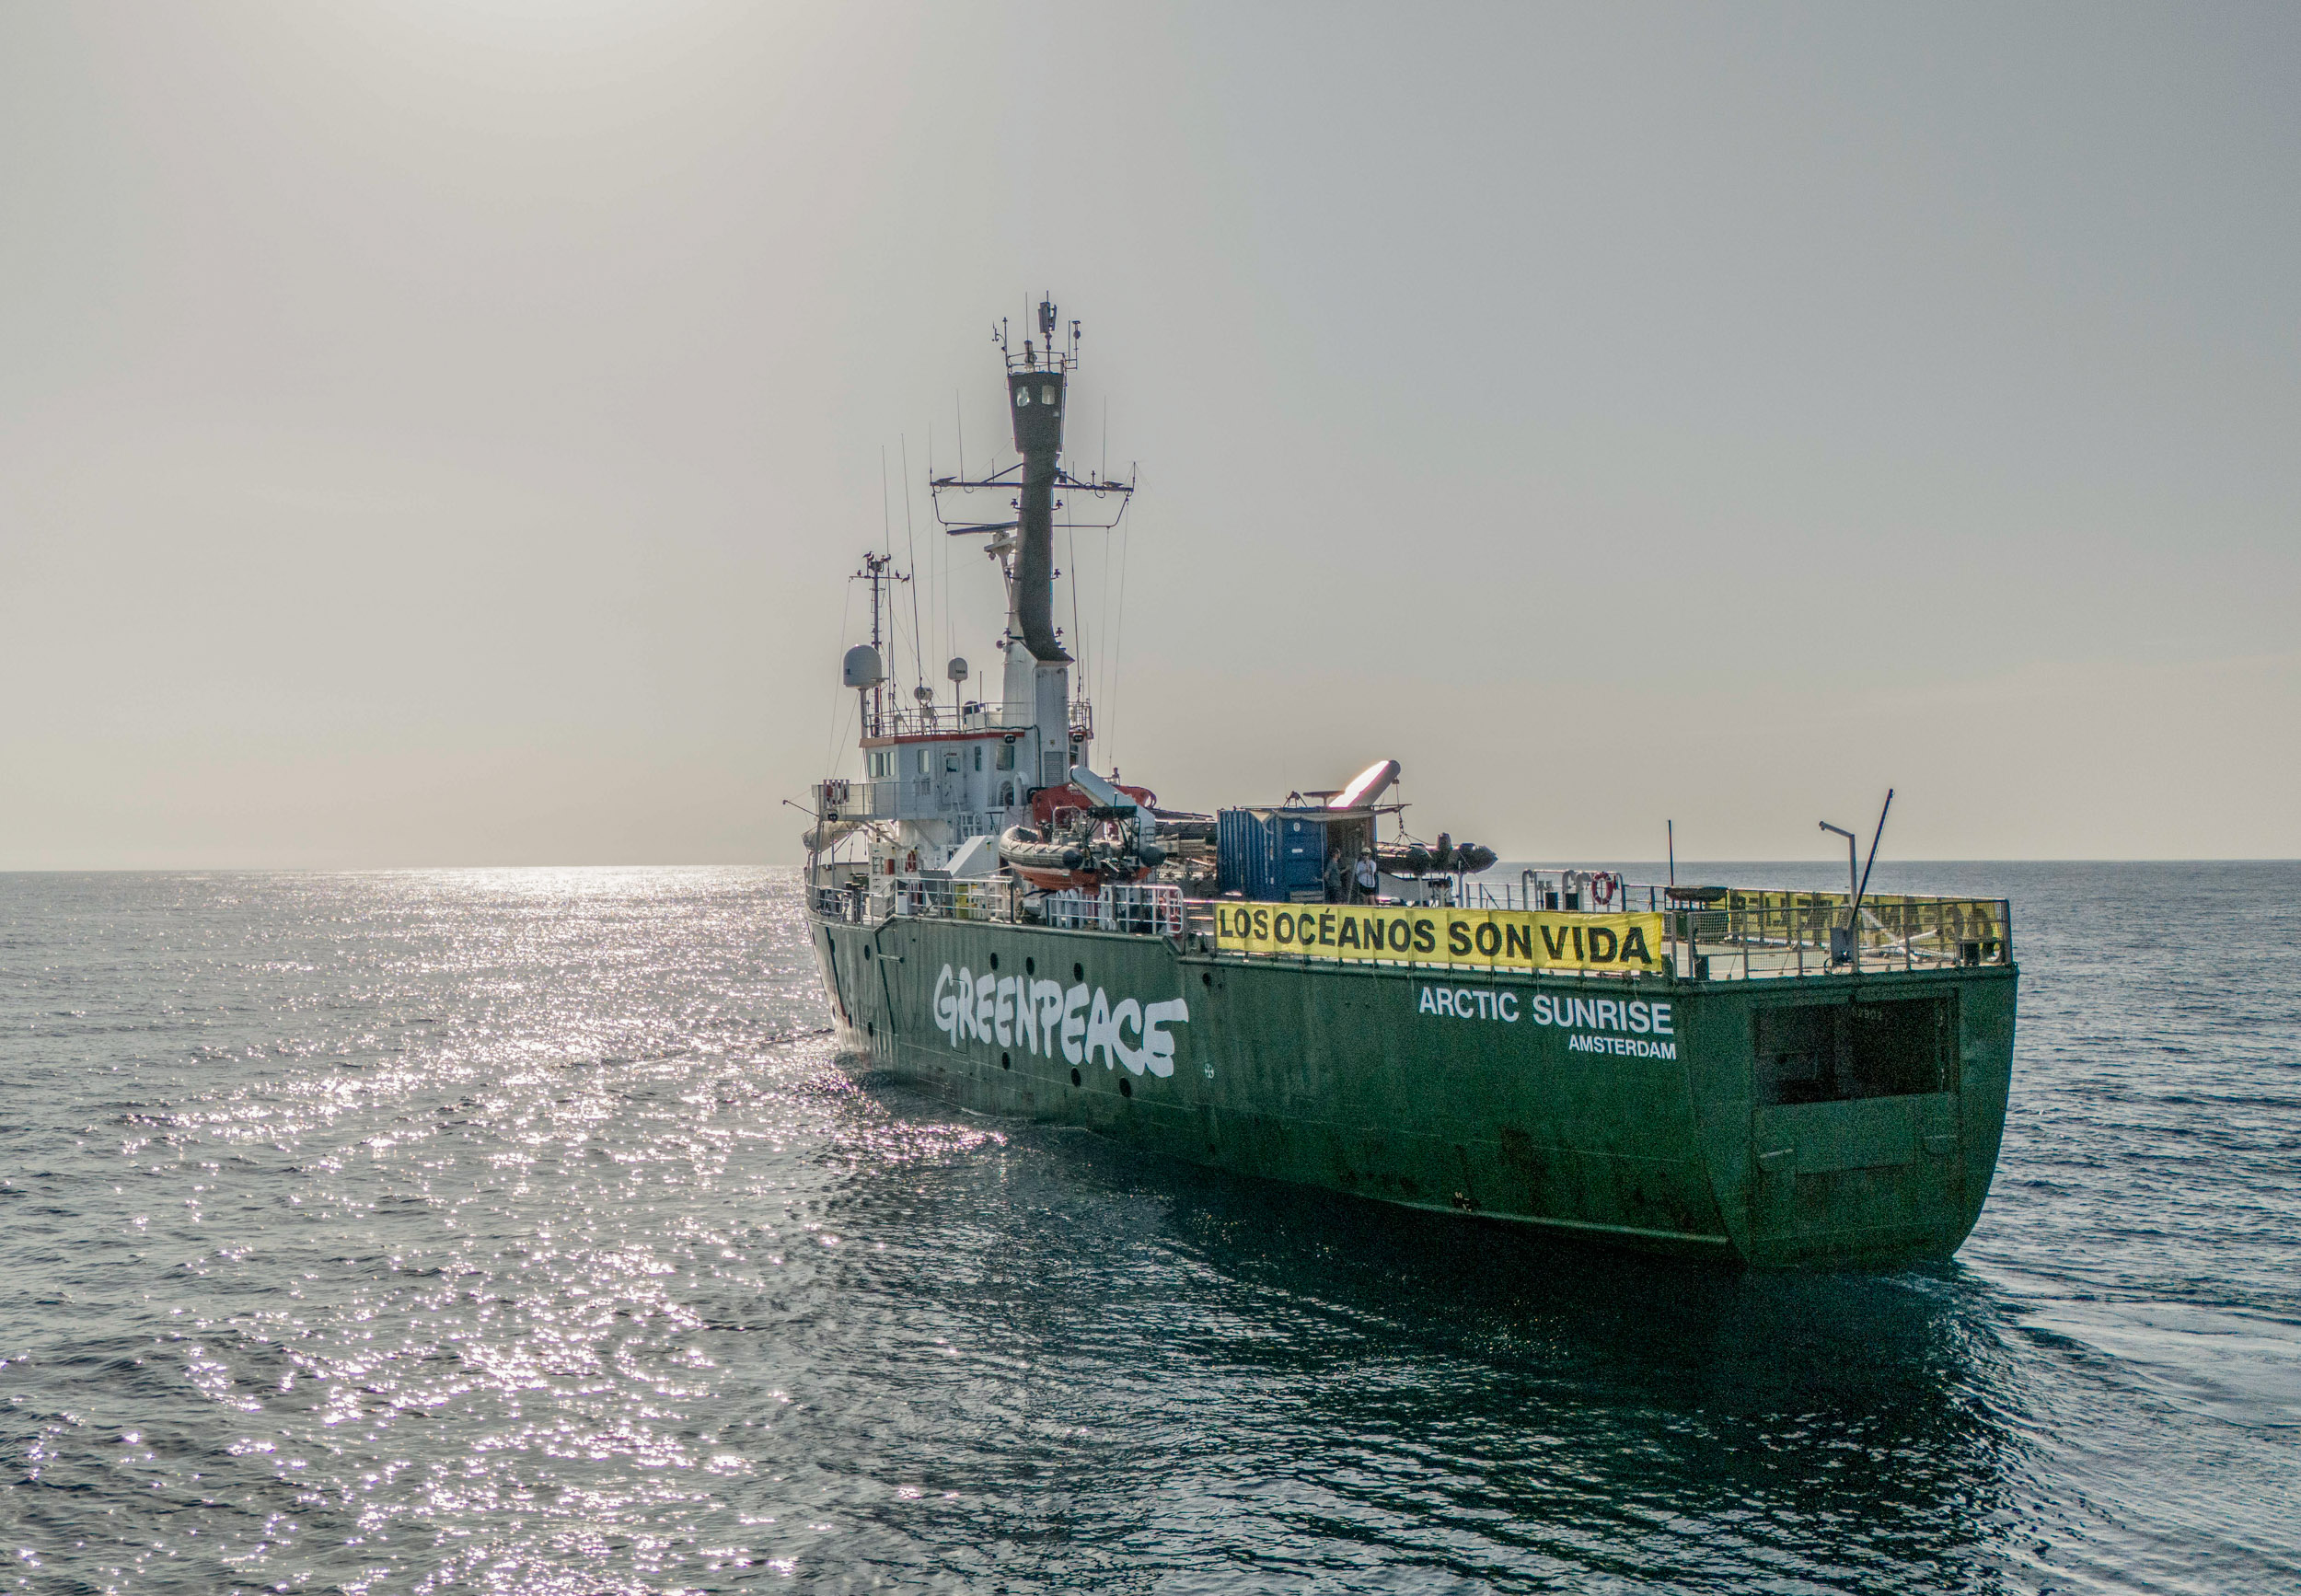 Barco Arctics Sunrise de Greenpeace llegará por primera vez a Colombia